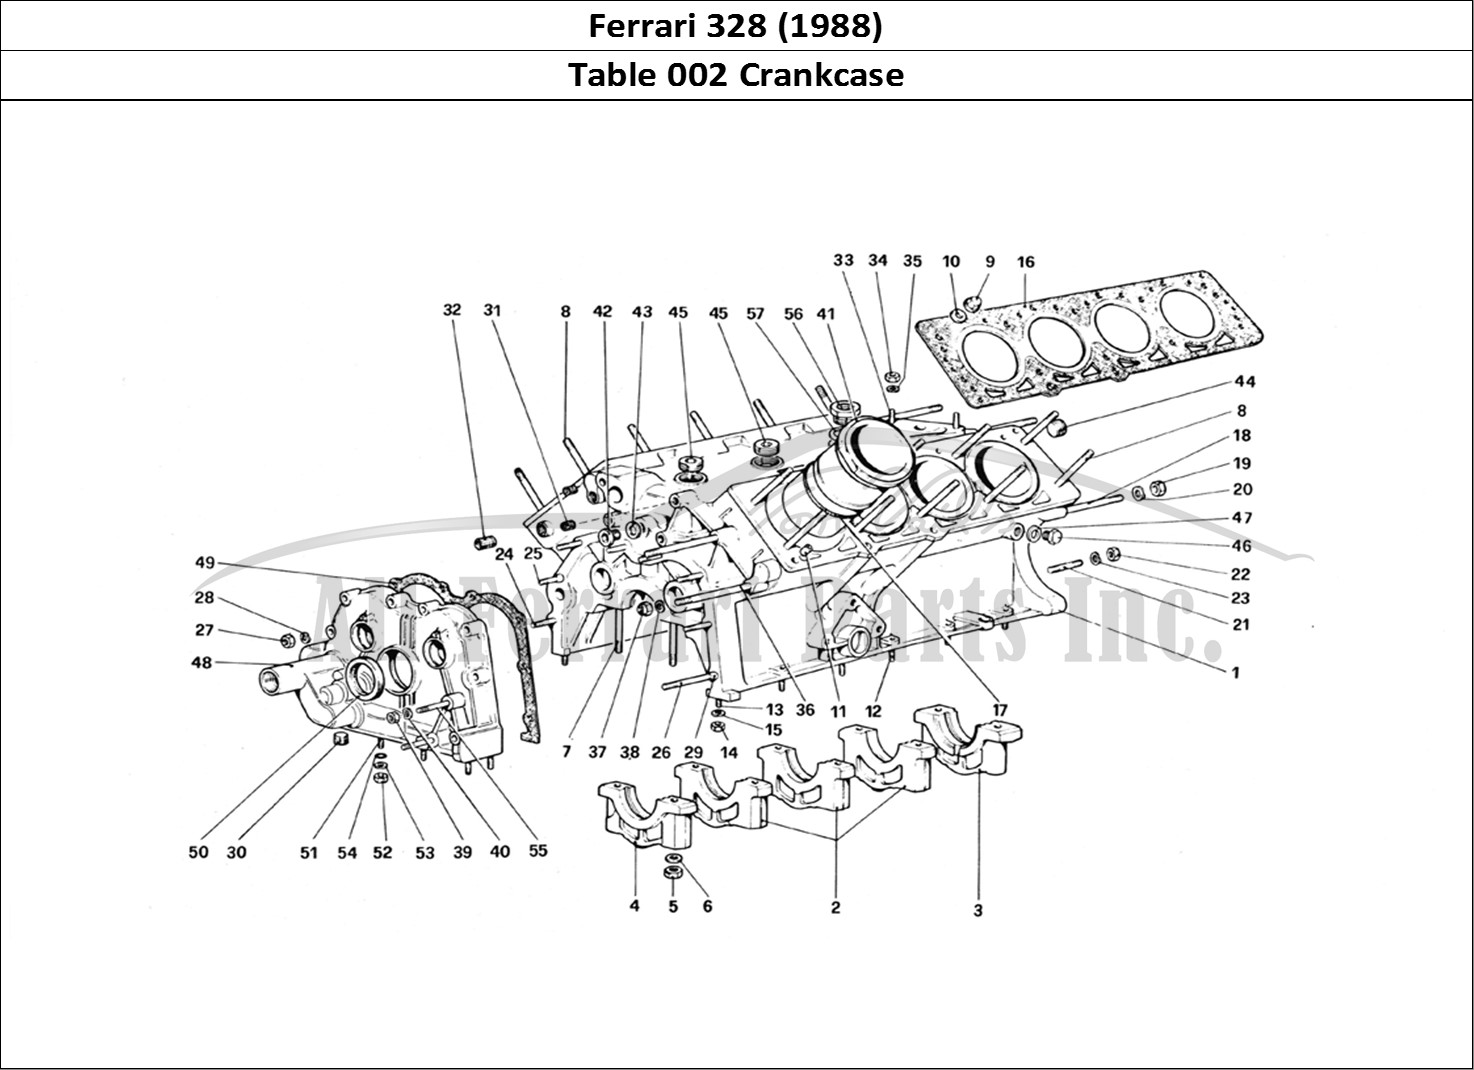 Ferrari Parts Ferrari 328 (1988) Page 002 Crankcase